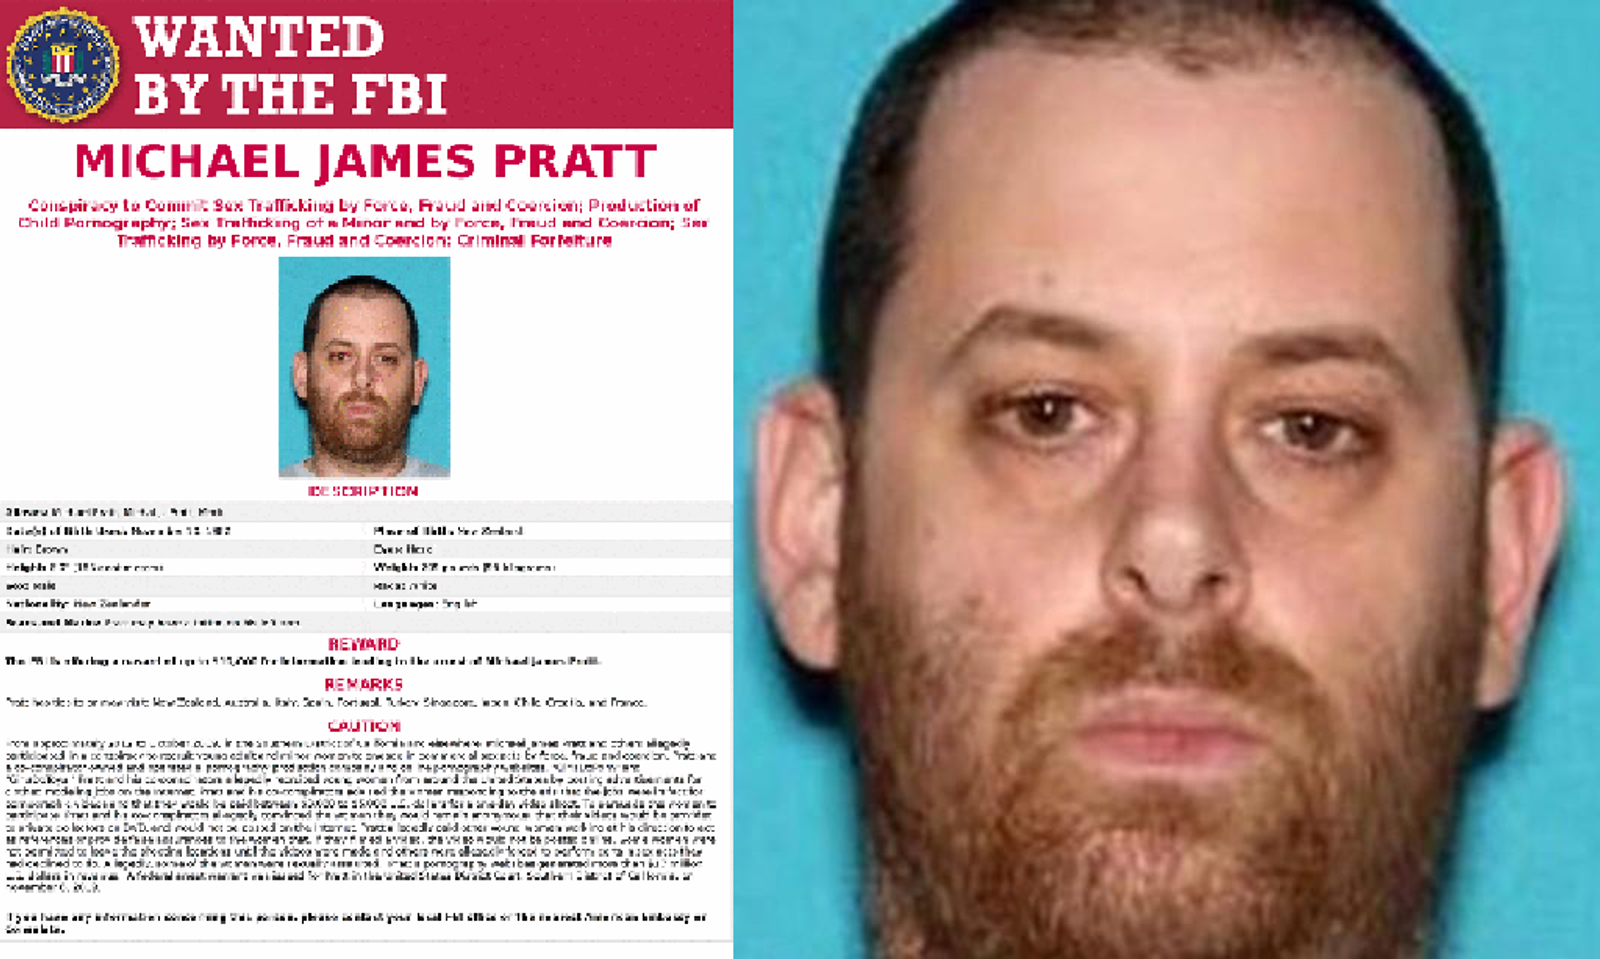 FBI Offers $10,000 Reward for Info on GirlsDoPorn's Michael Pratt